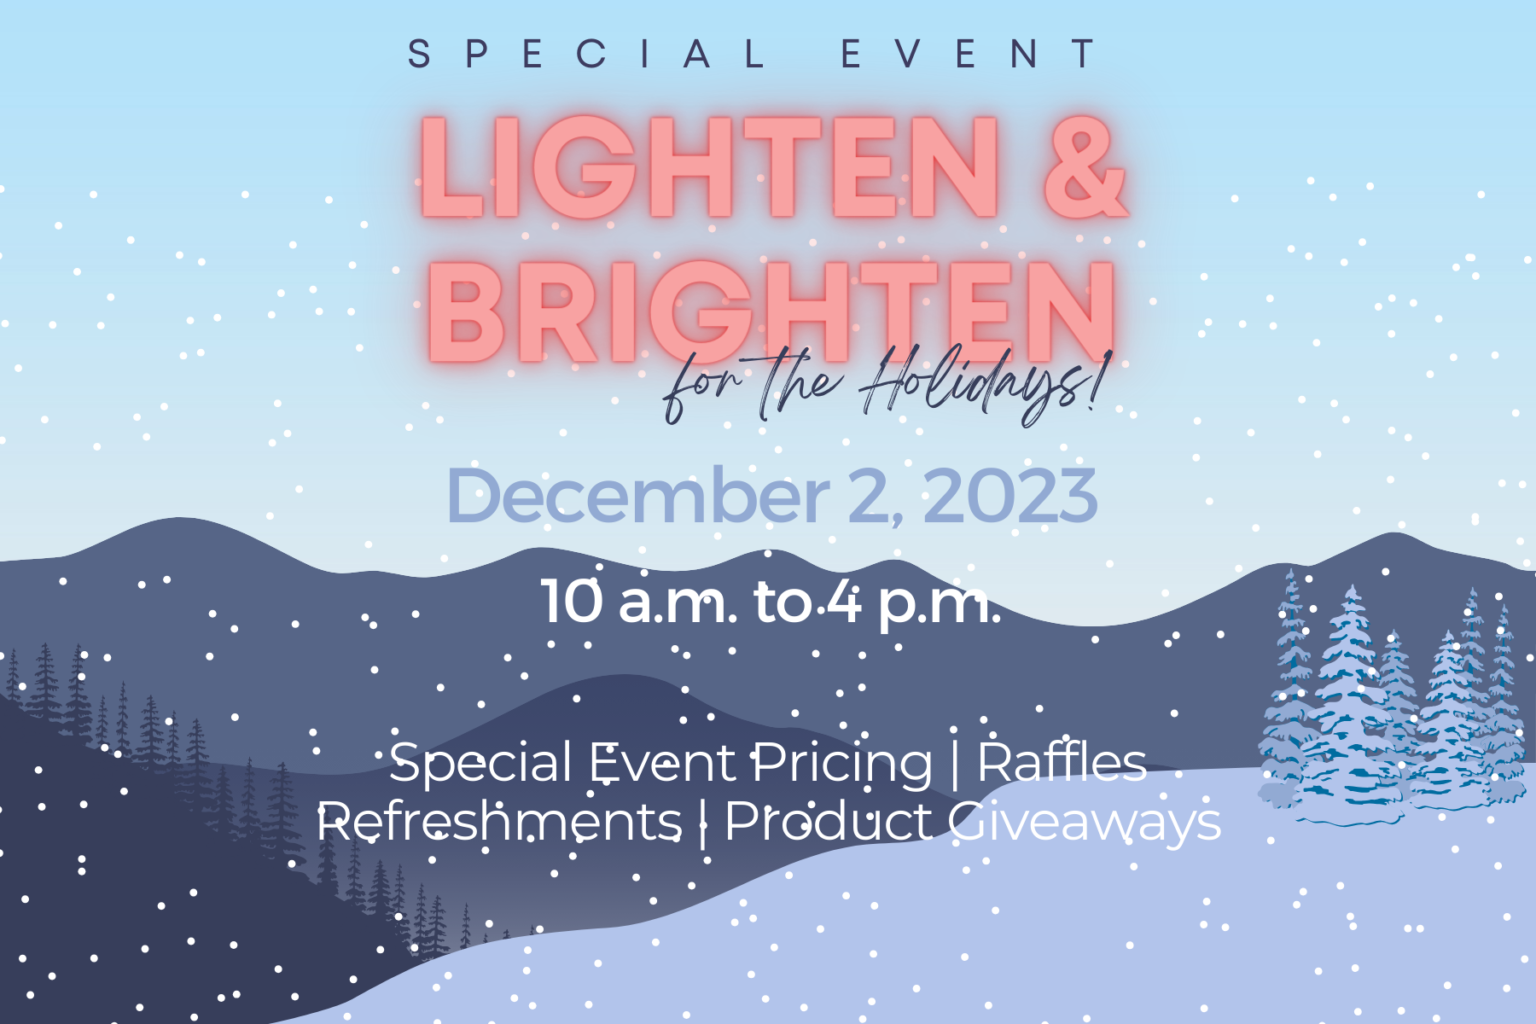 Information on the Lighten and Brighten event happening December 2, 2023